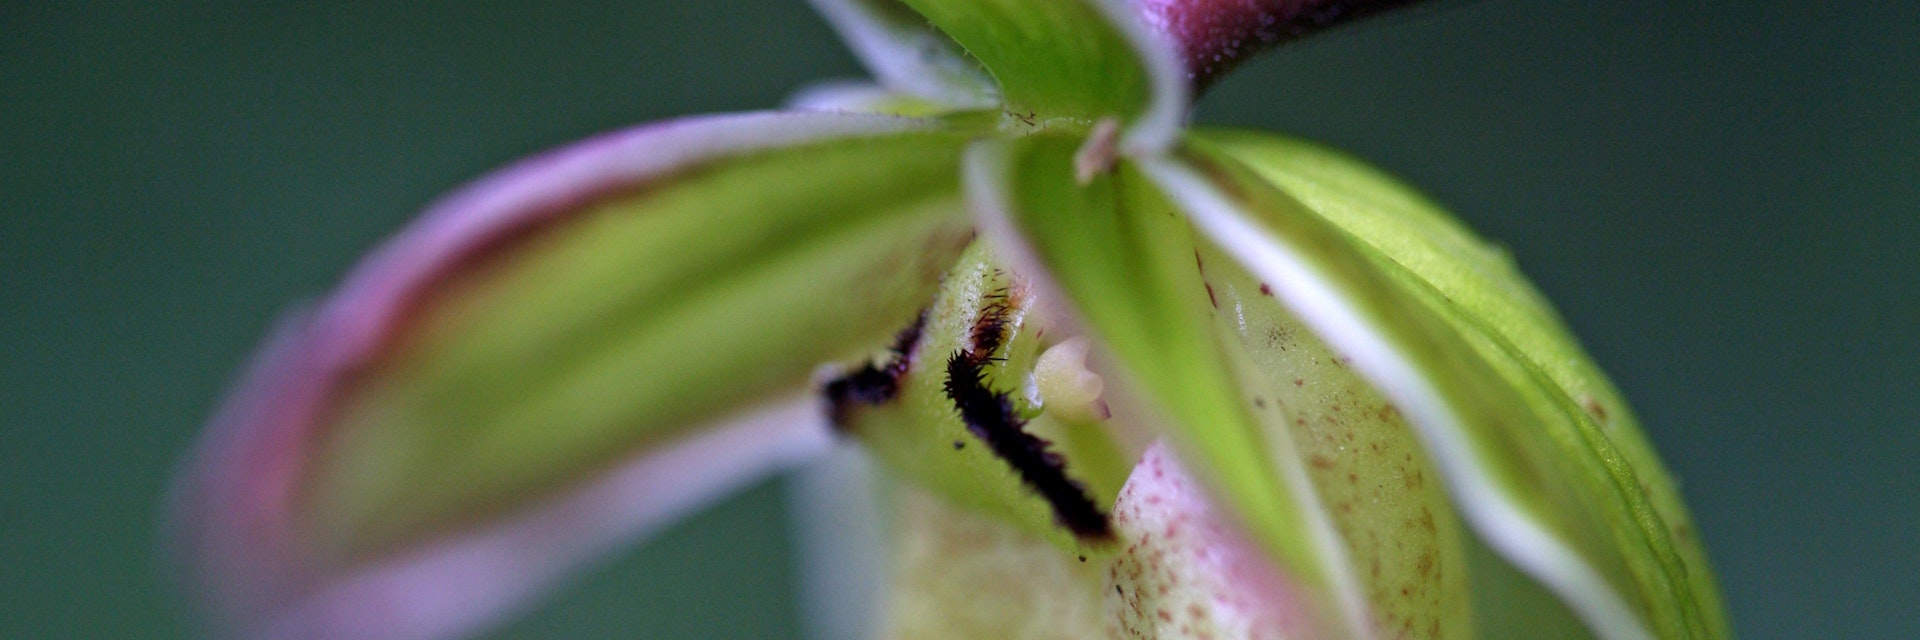 Ladys Slipper (Cypripedium calceolus) orchid.